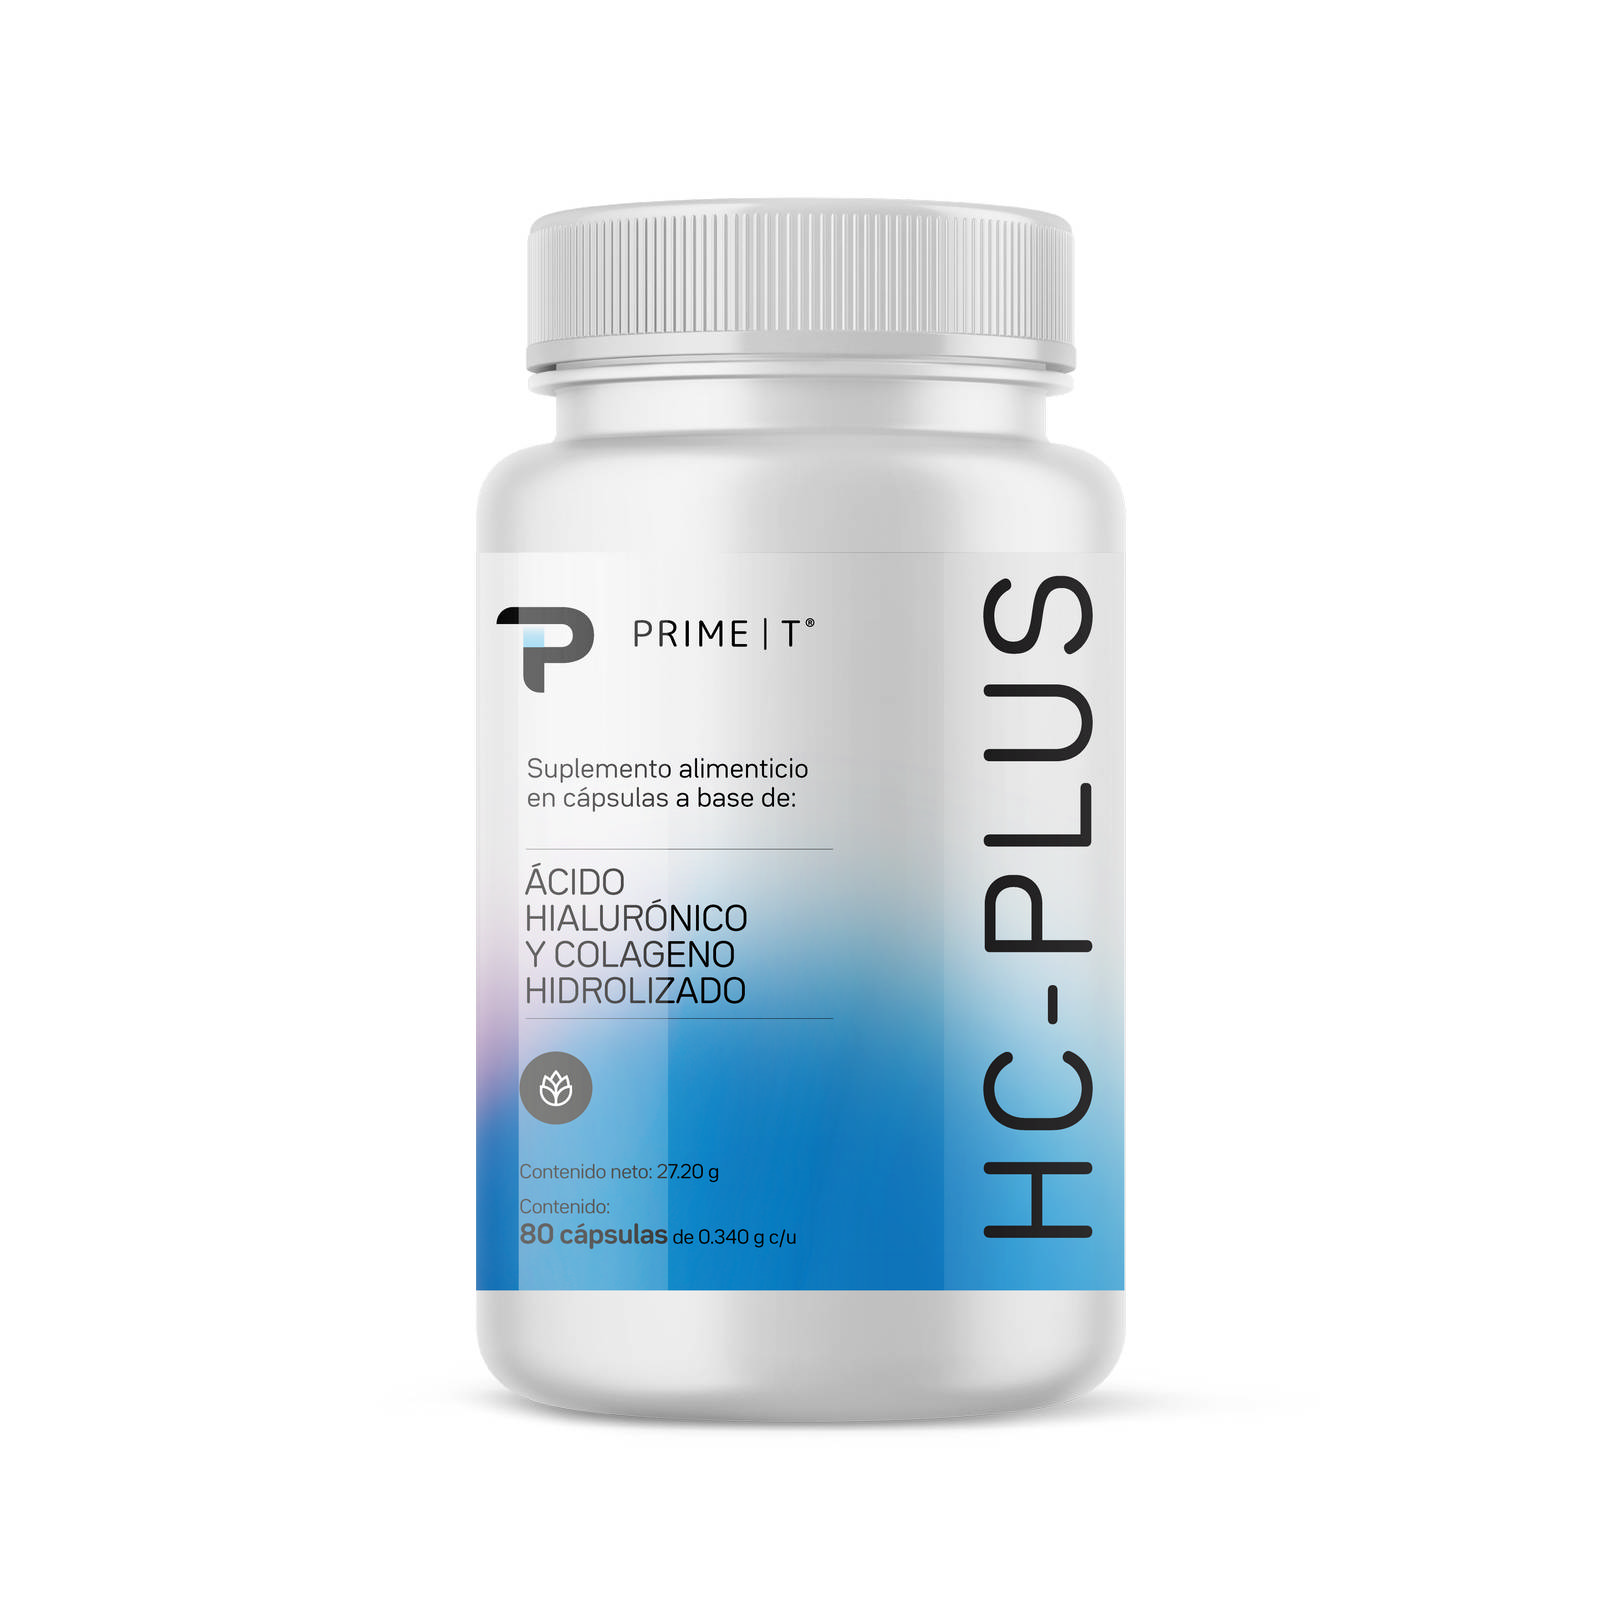 ÁCIDO HIALURÓNICO HC-PLUS Primetech 80 cápsulas de 340 mg